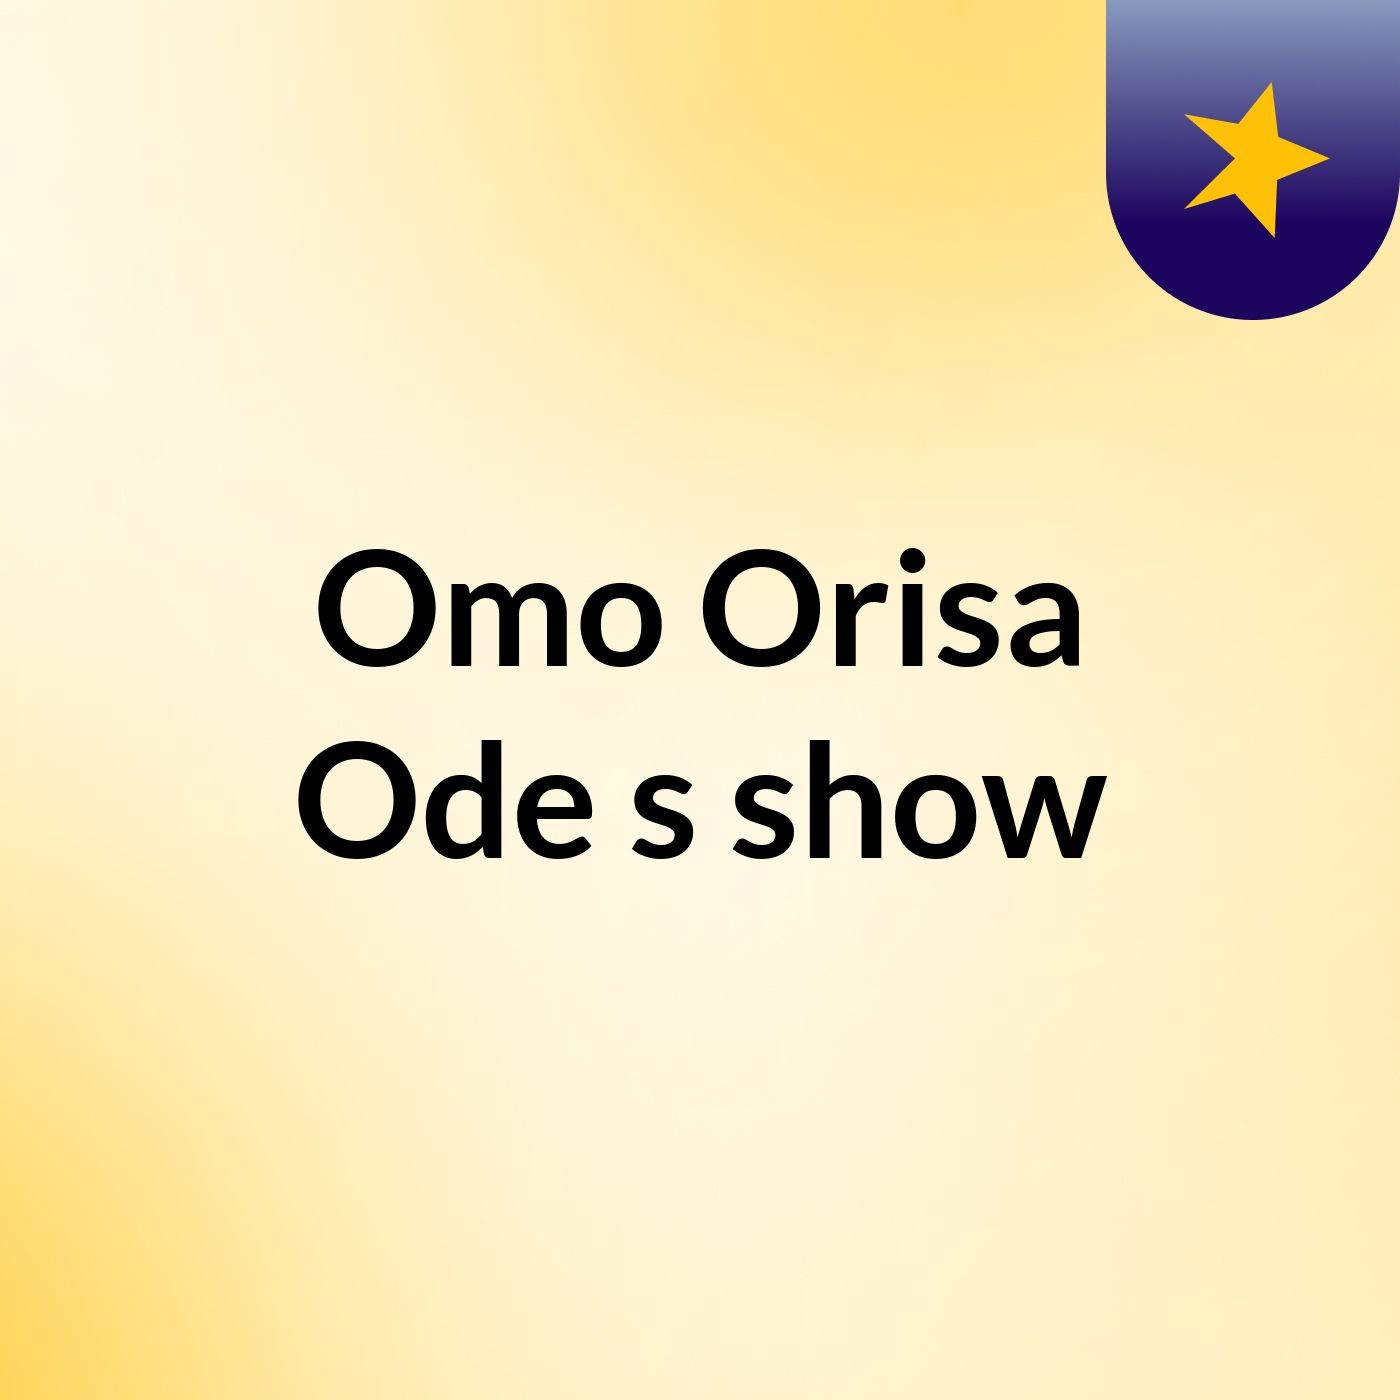 Omo Orisa Ode's show